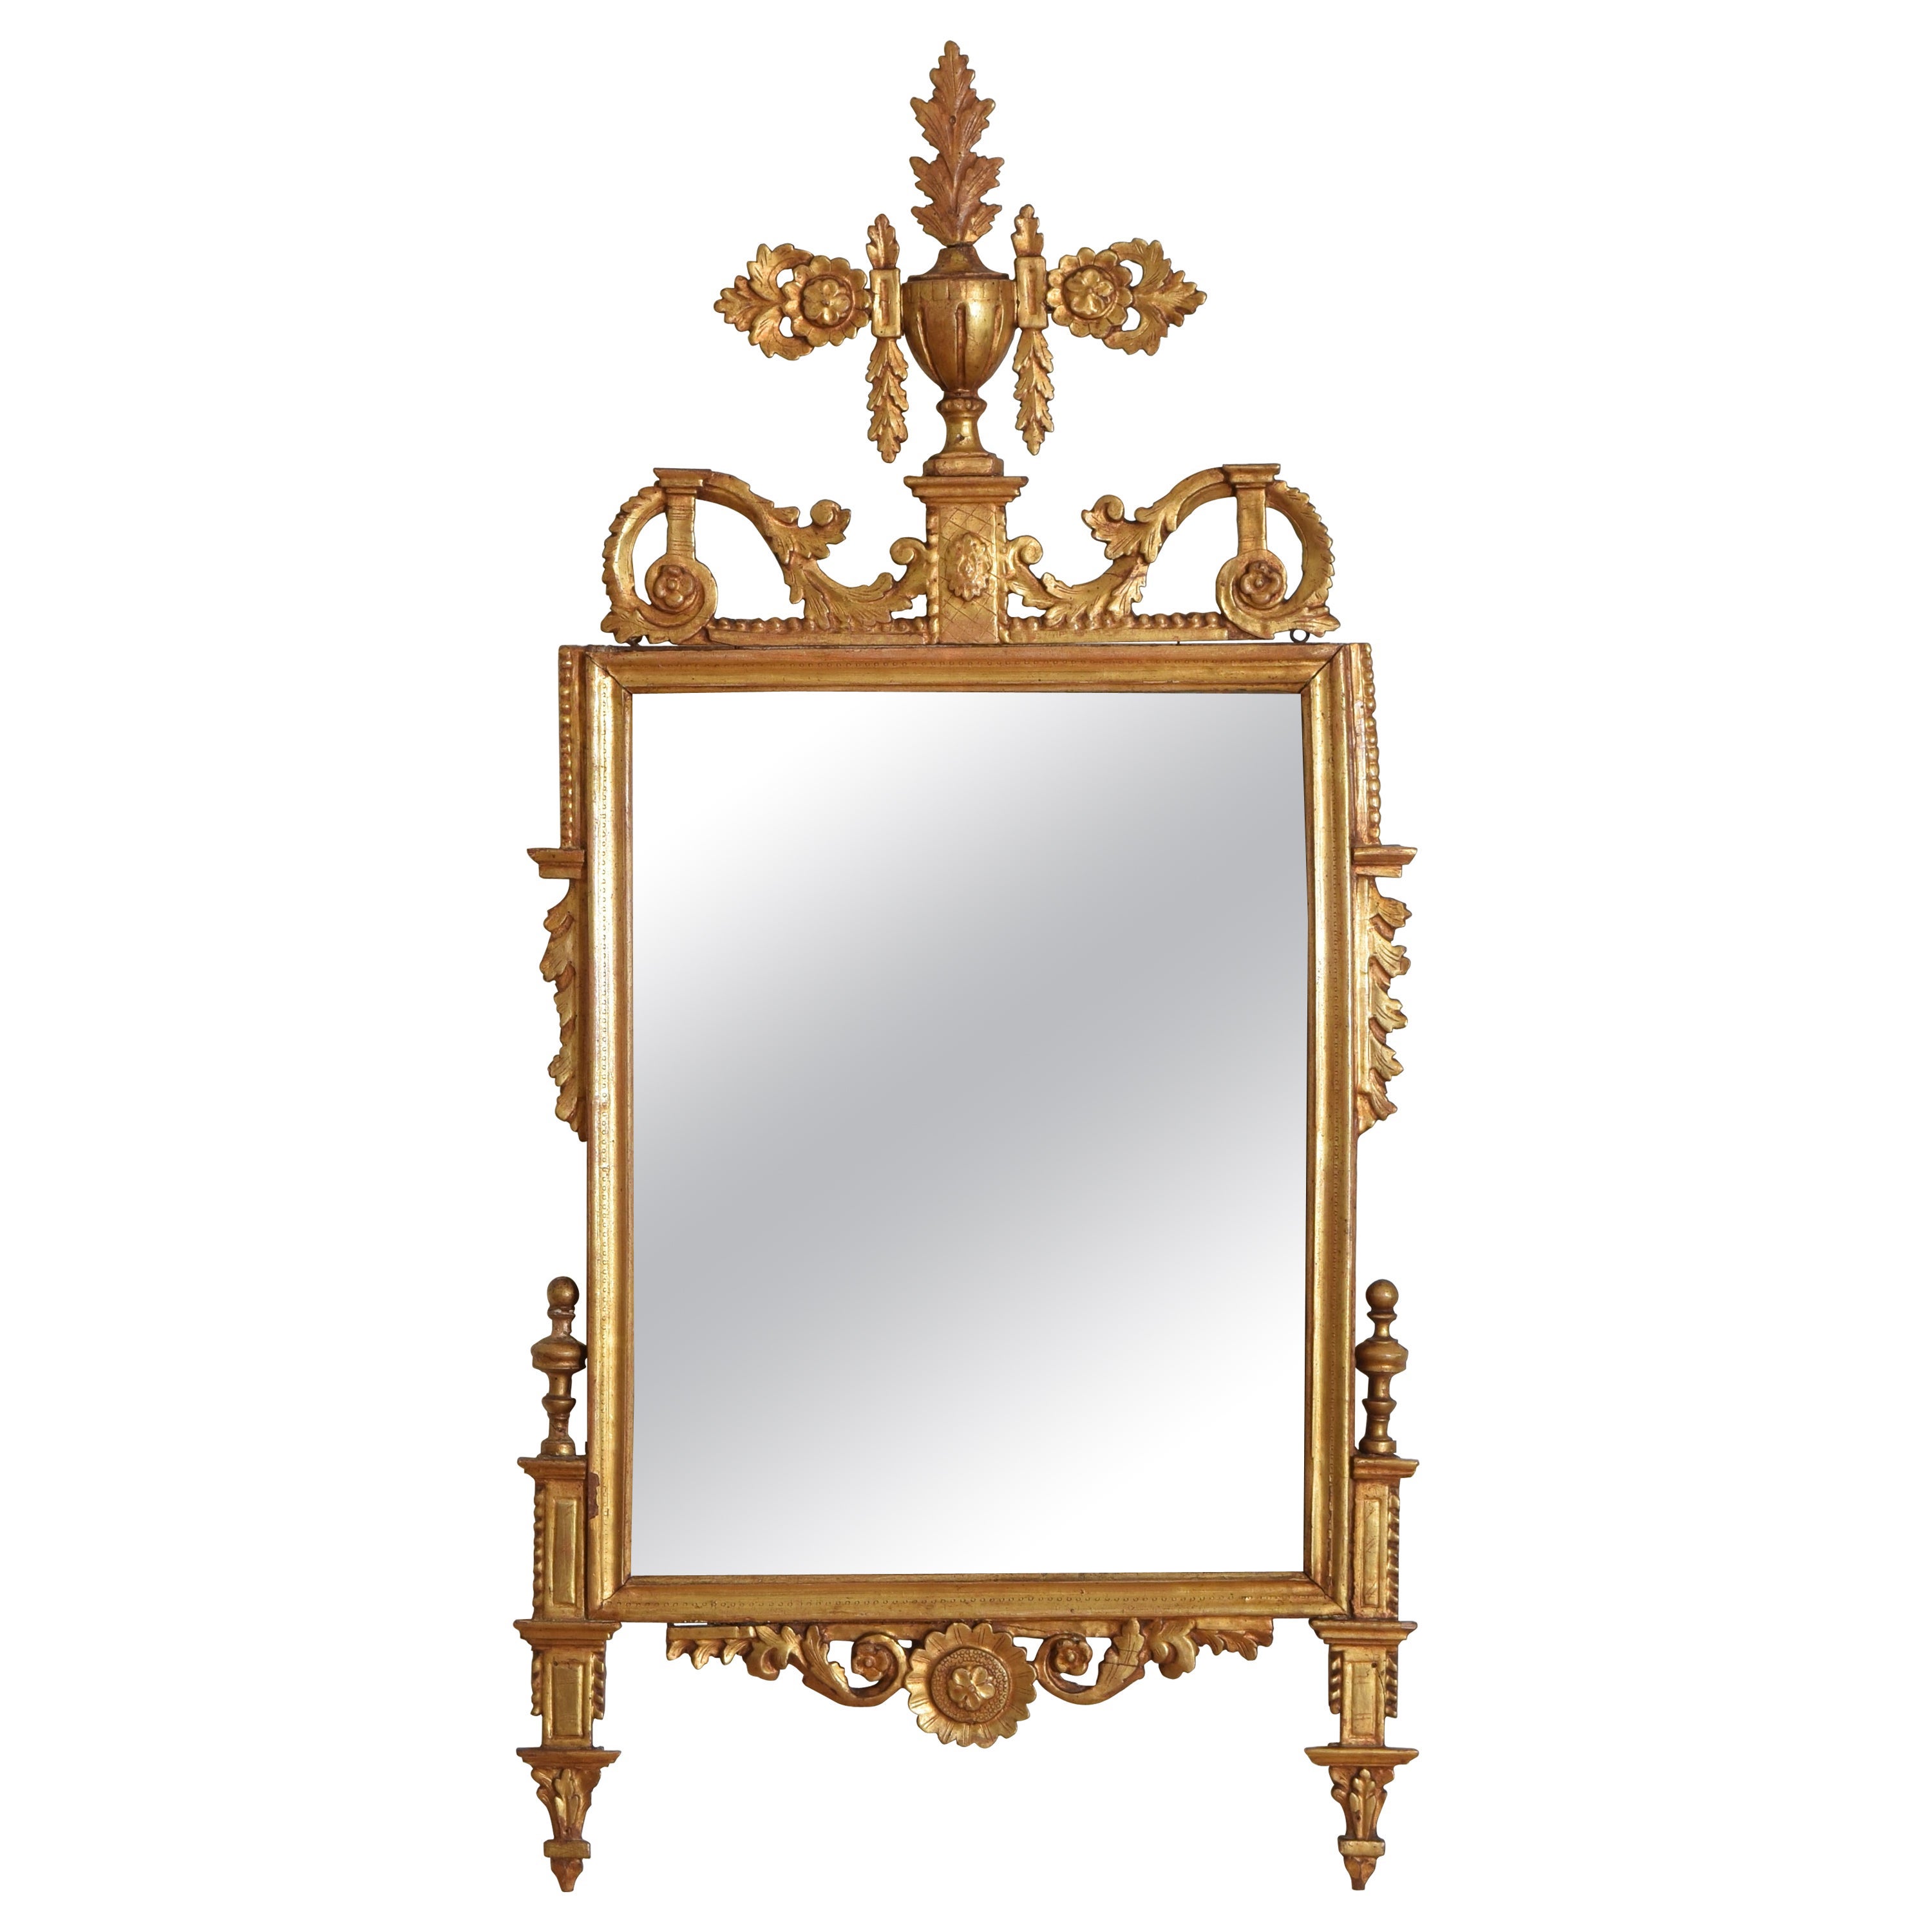 Italian, Tuscan, Carved Giltwood Mirror, Last Quarter 18th Century